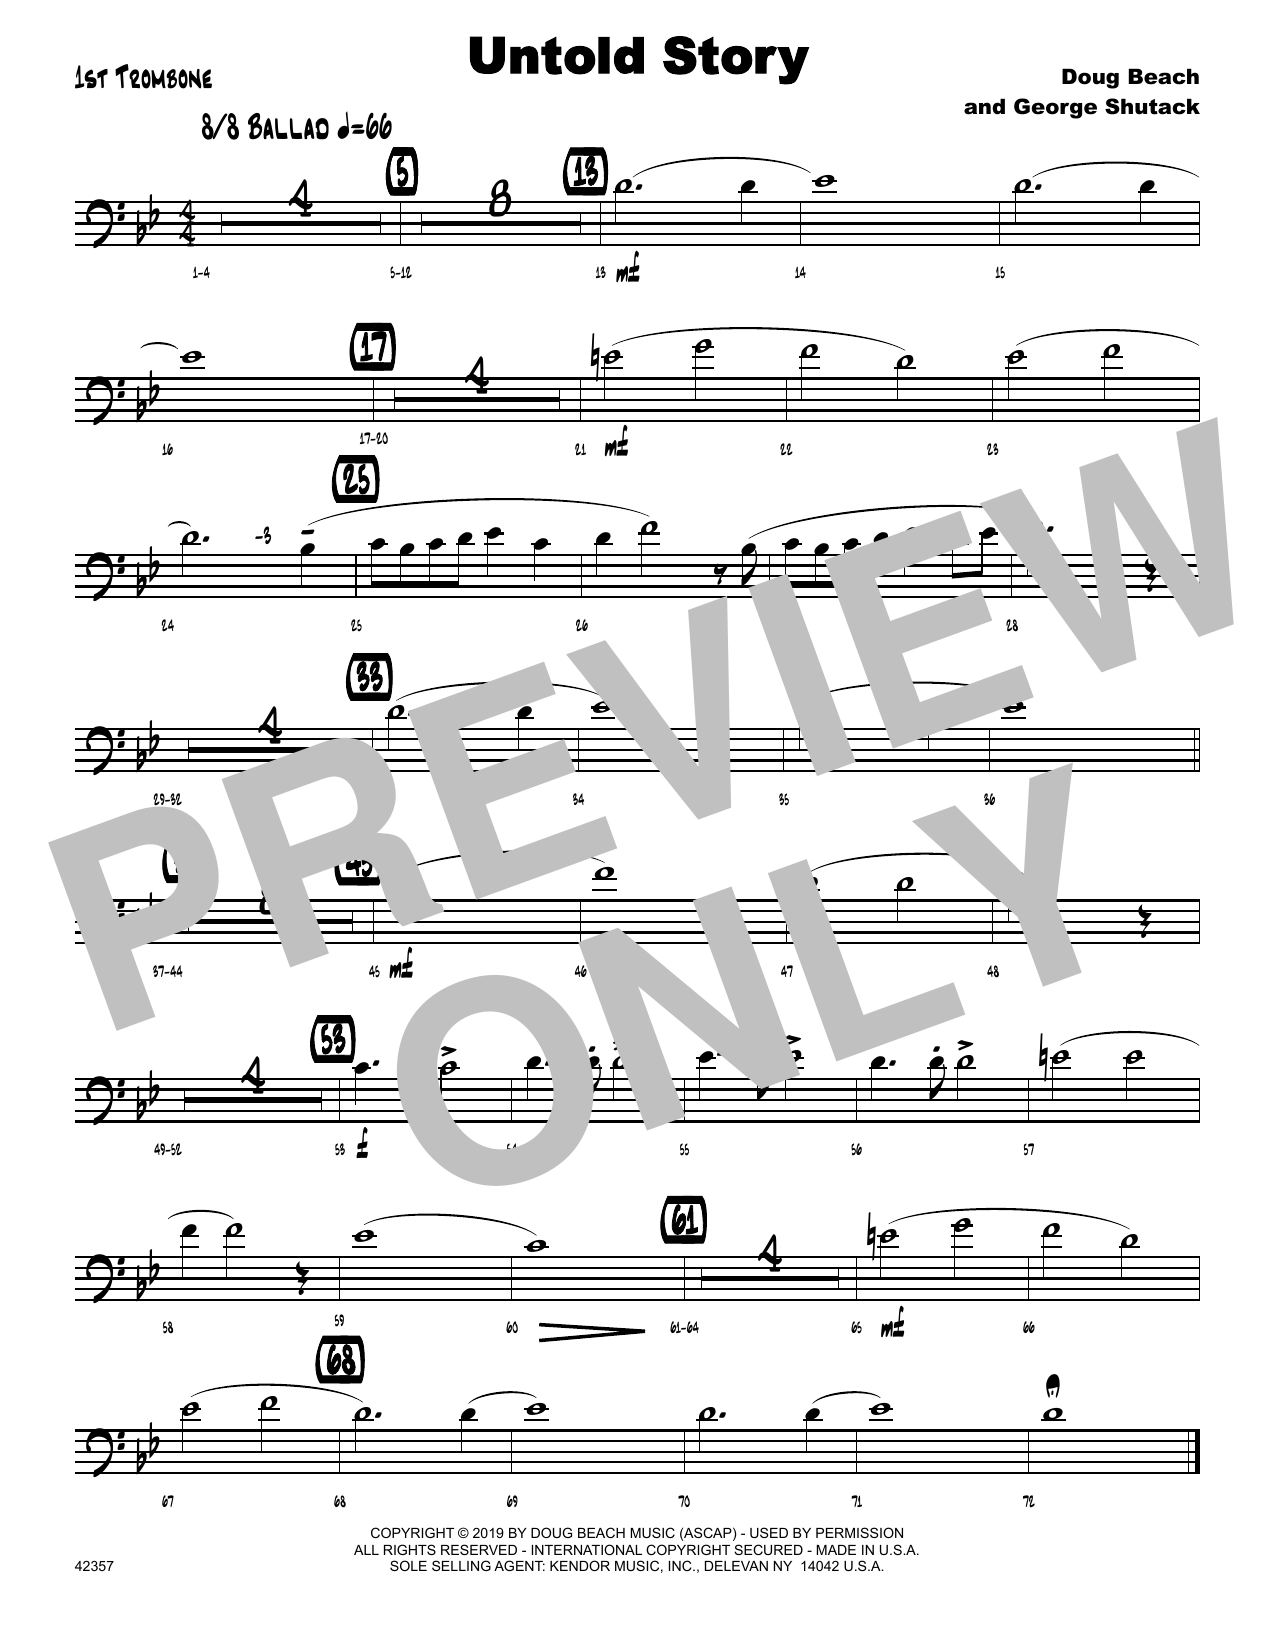 Download Doug Beach & George Shutack Untold Story - 1st Trombone Sheet Music